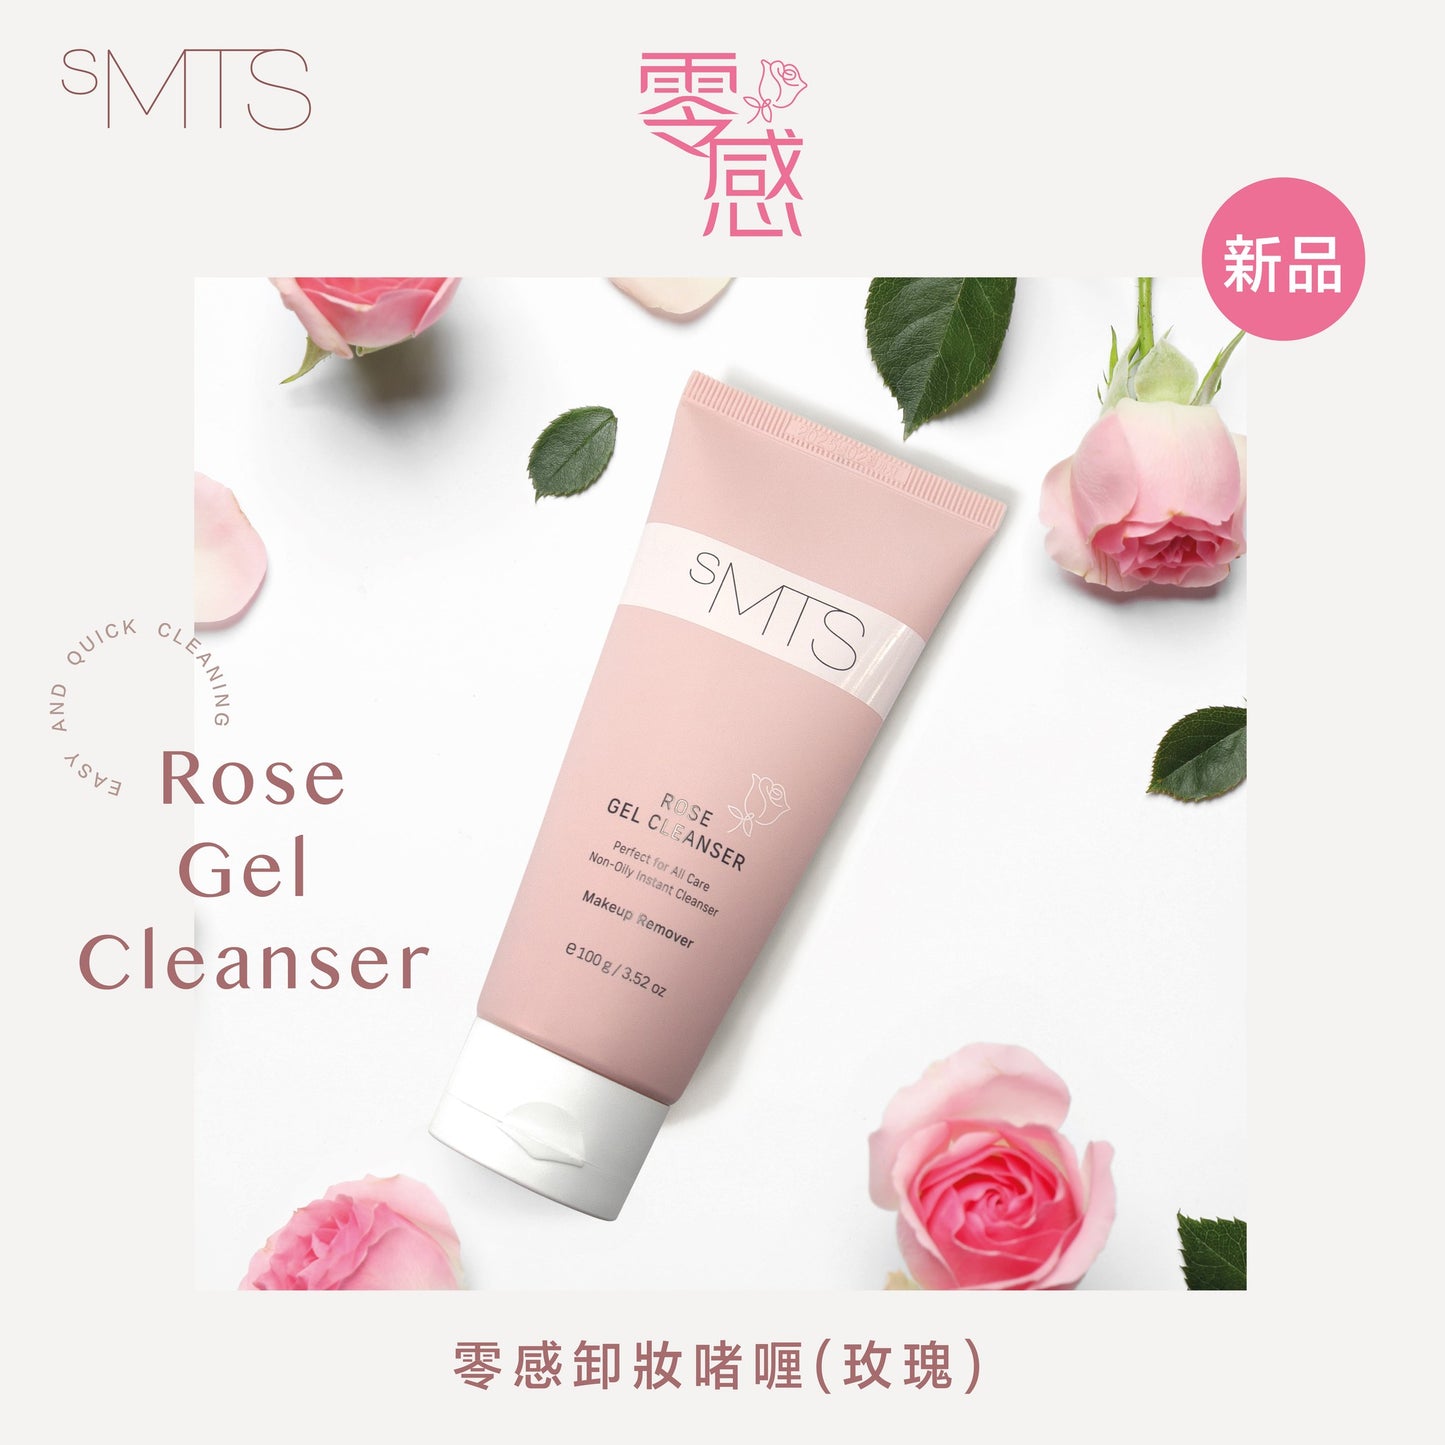 SMTS  Rose Gel Cleanser 零感卸妝啫喱-玫瑰 100g